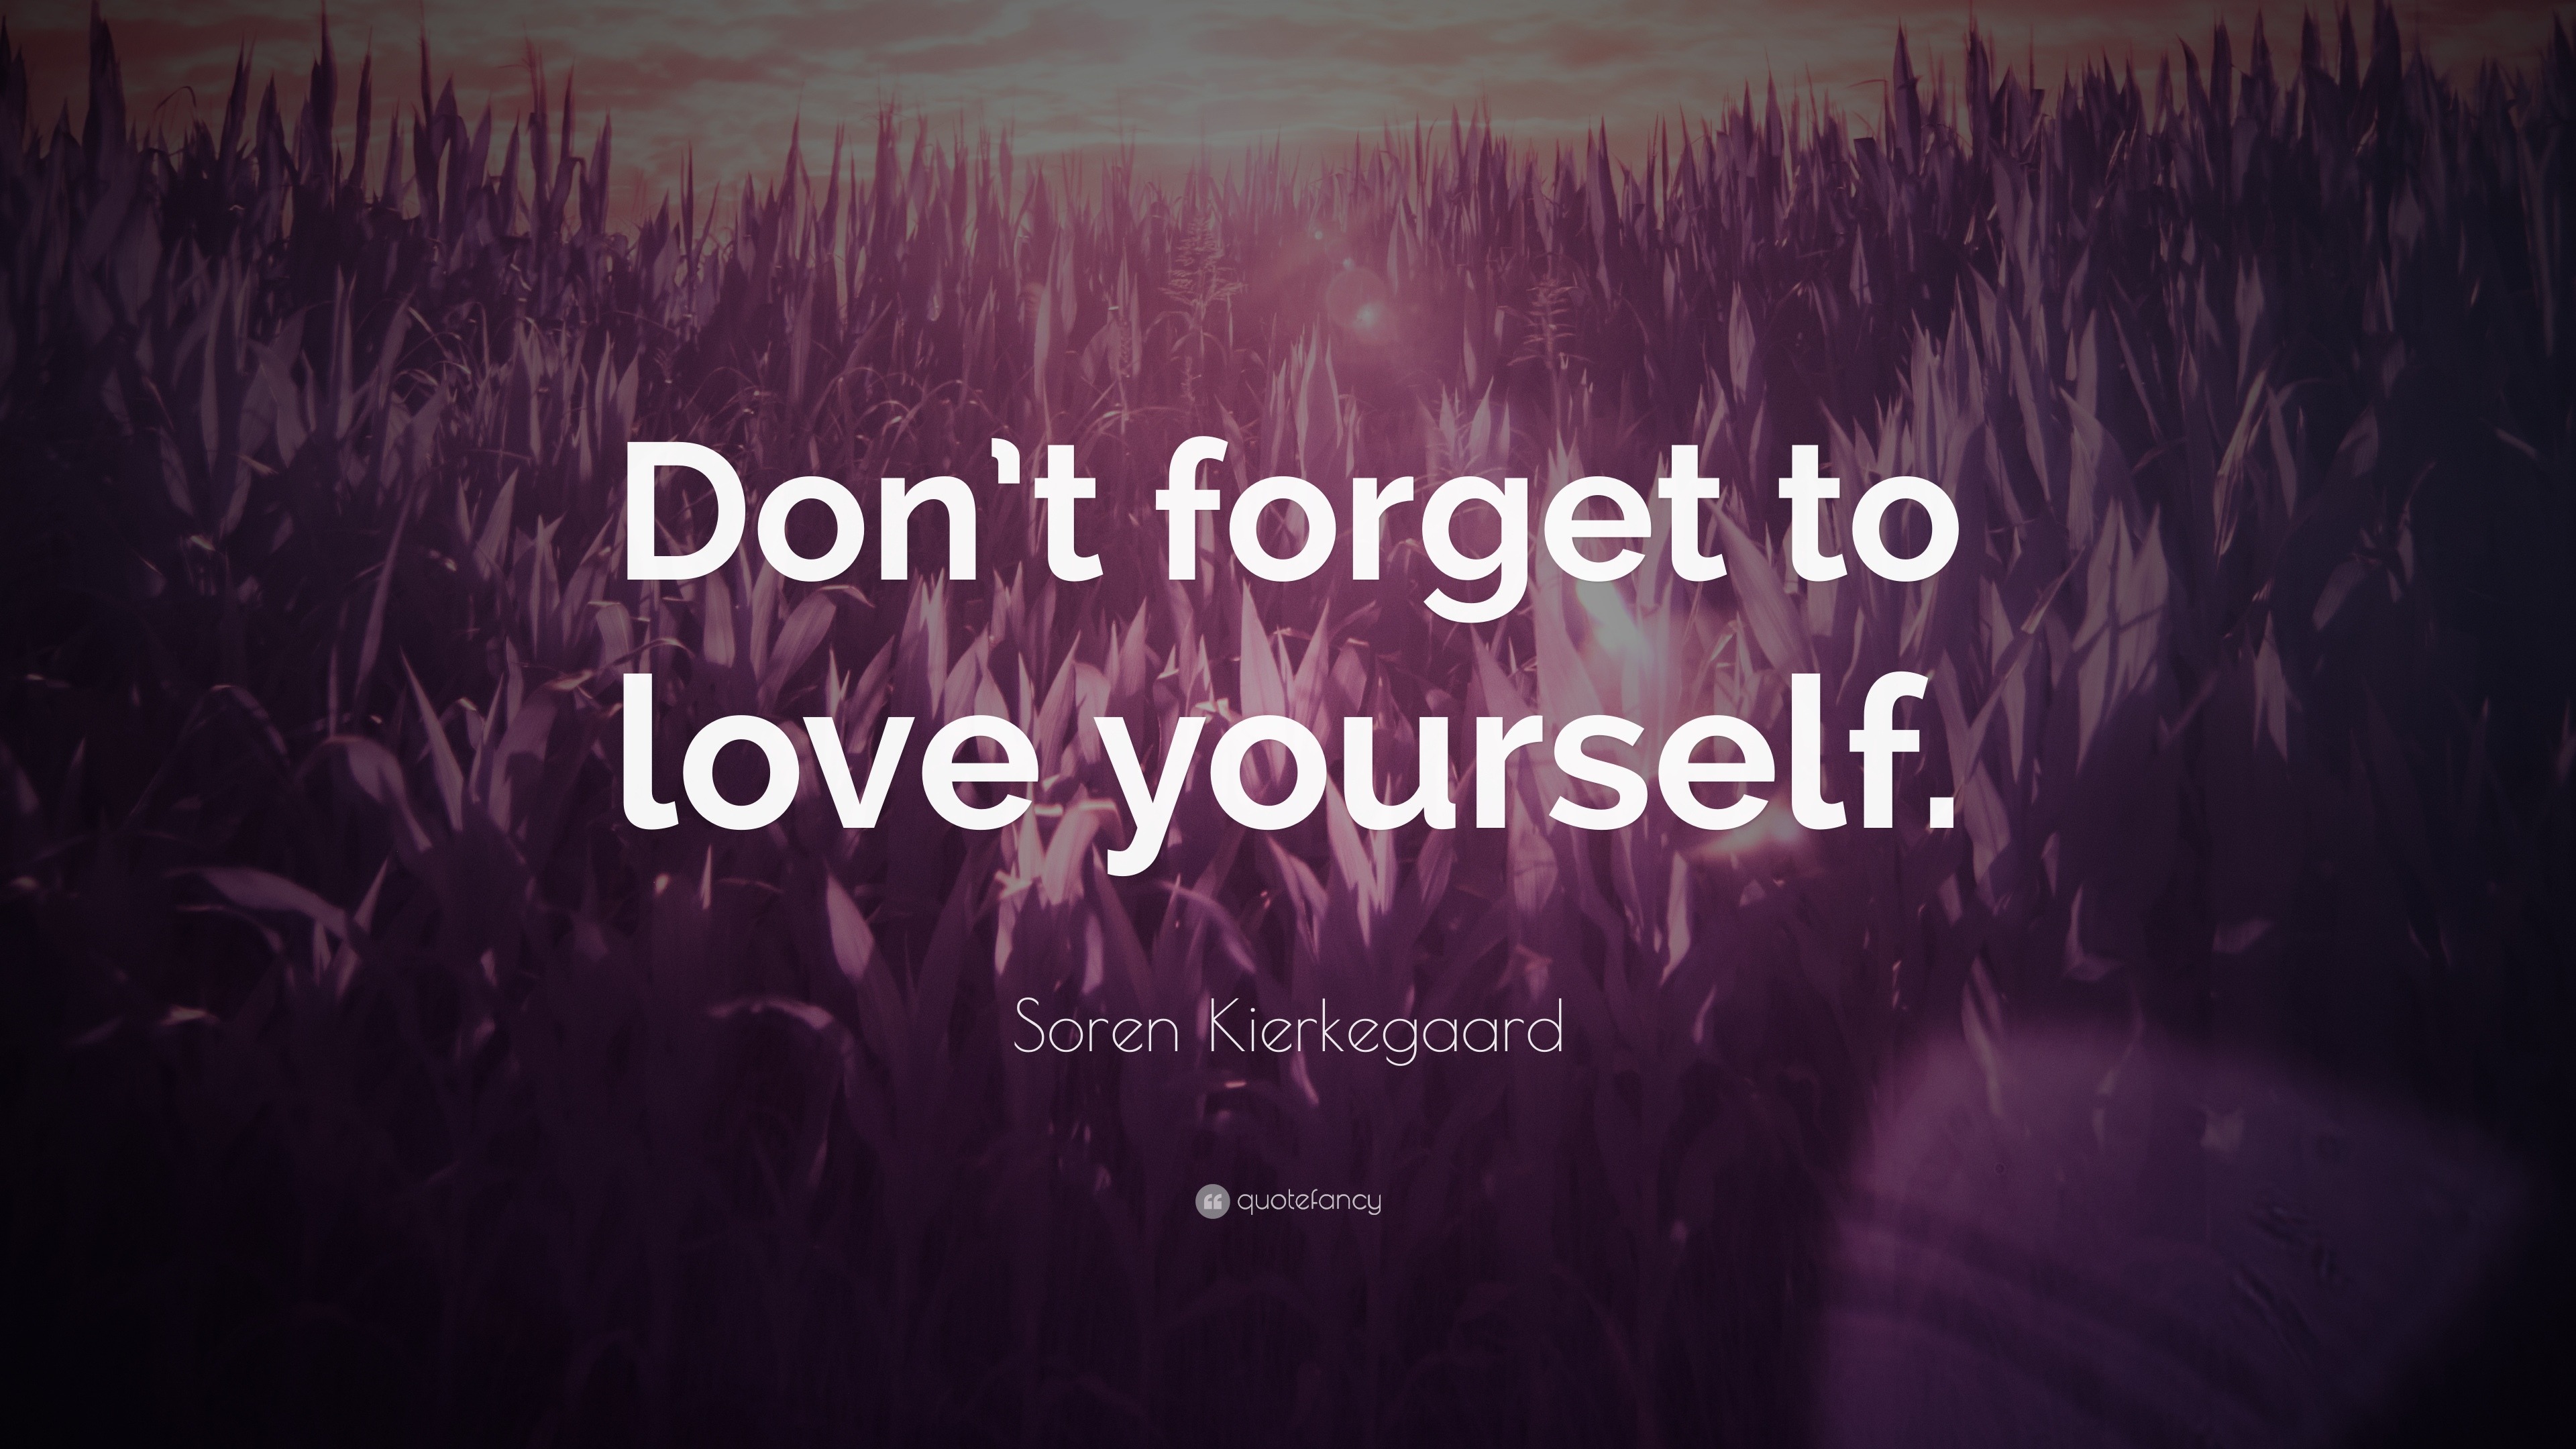 Soren Kierkegaard Quote “Don t for to love yourself ”